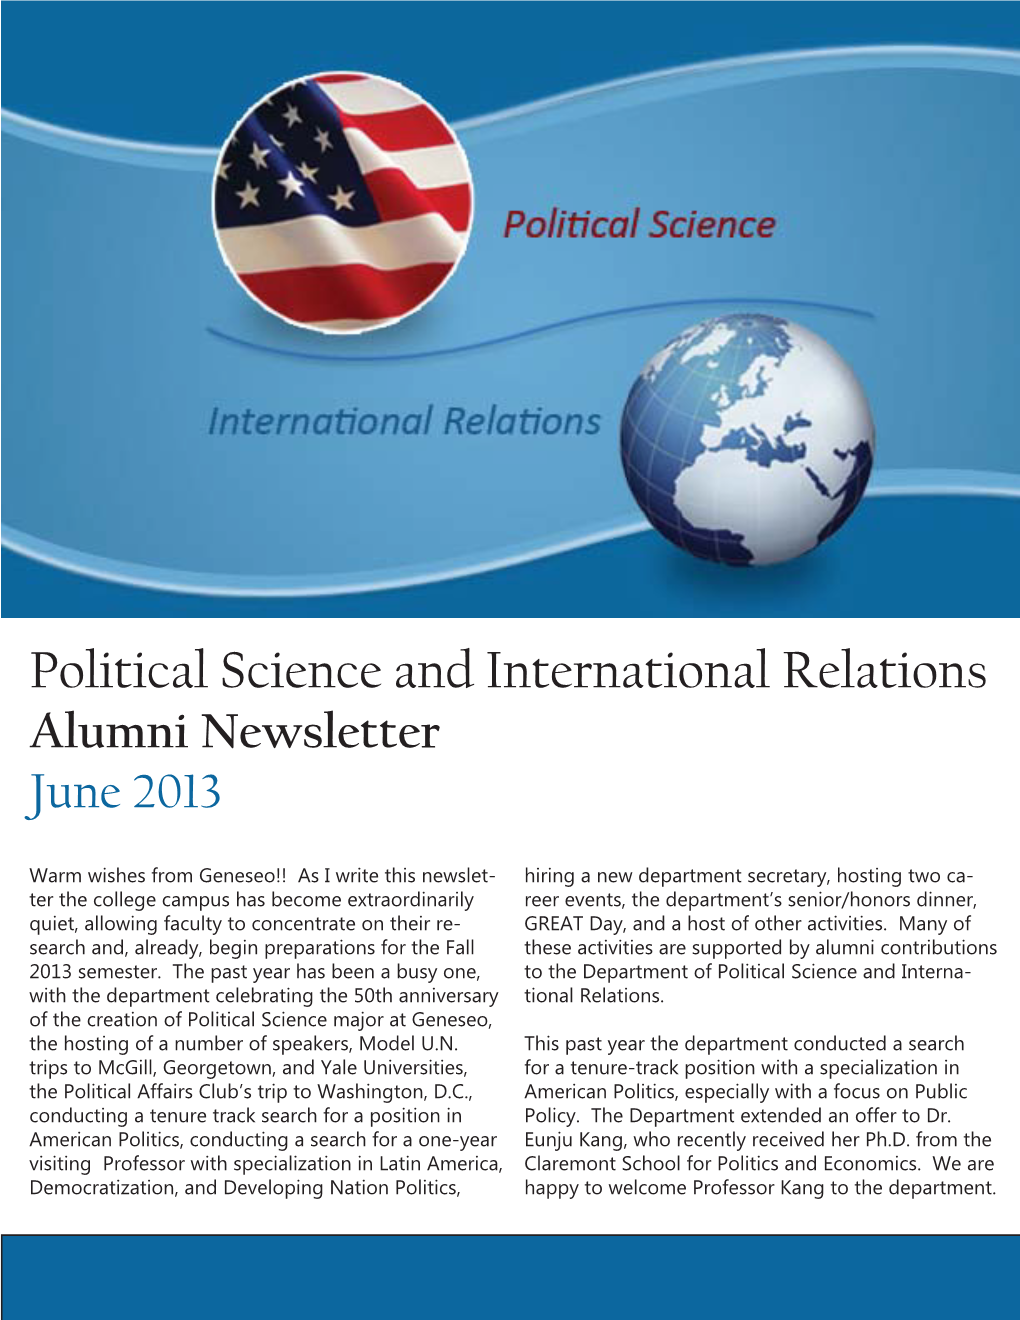 Political Science and International Relations Alumni Newsletter June 2013